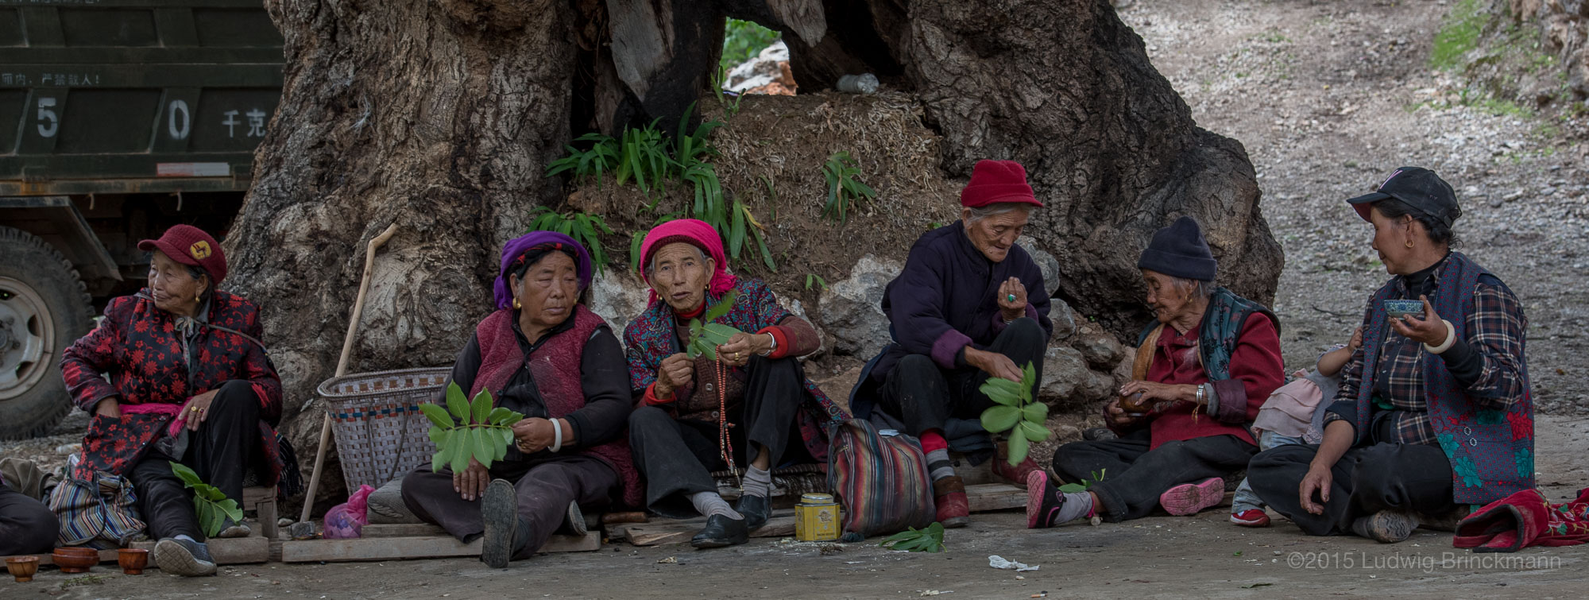 Picture: Tibetans in Tangdui celebrate the Dengba Festival.